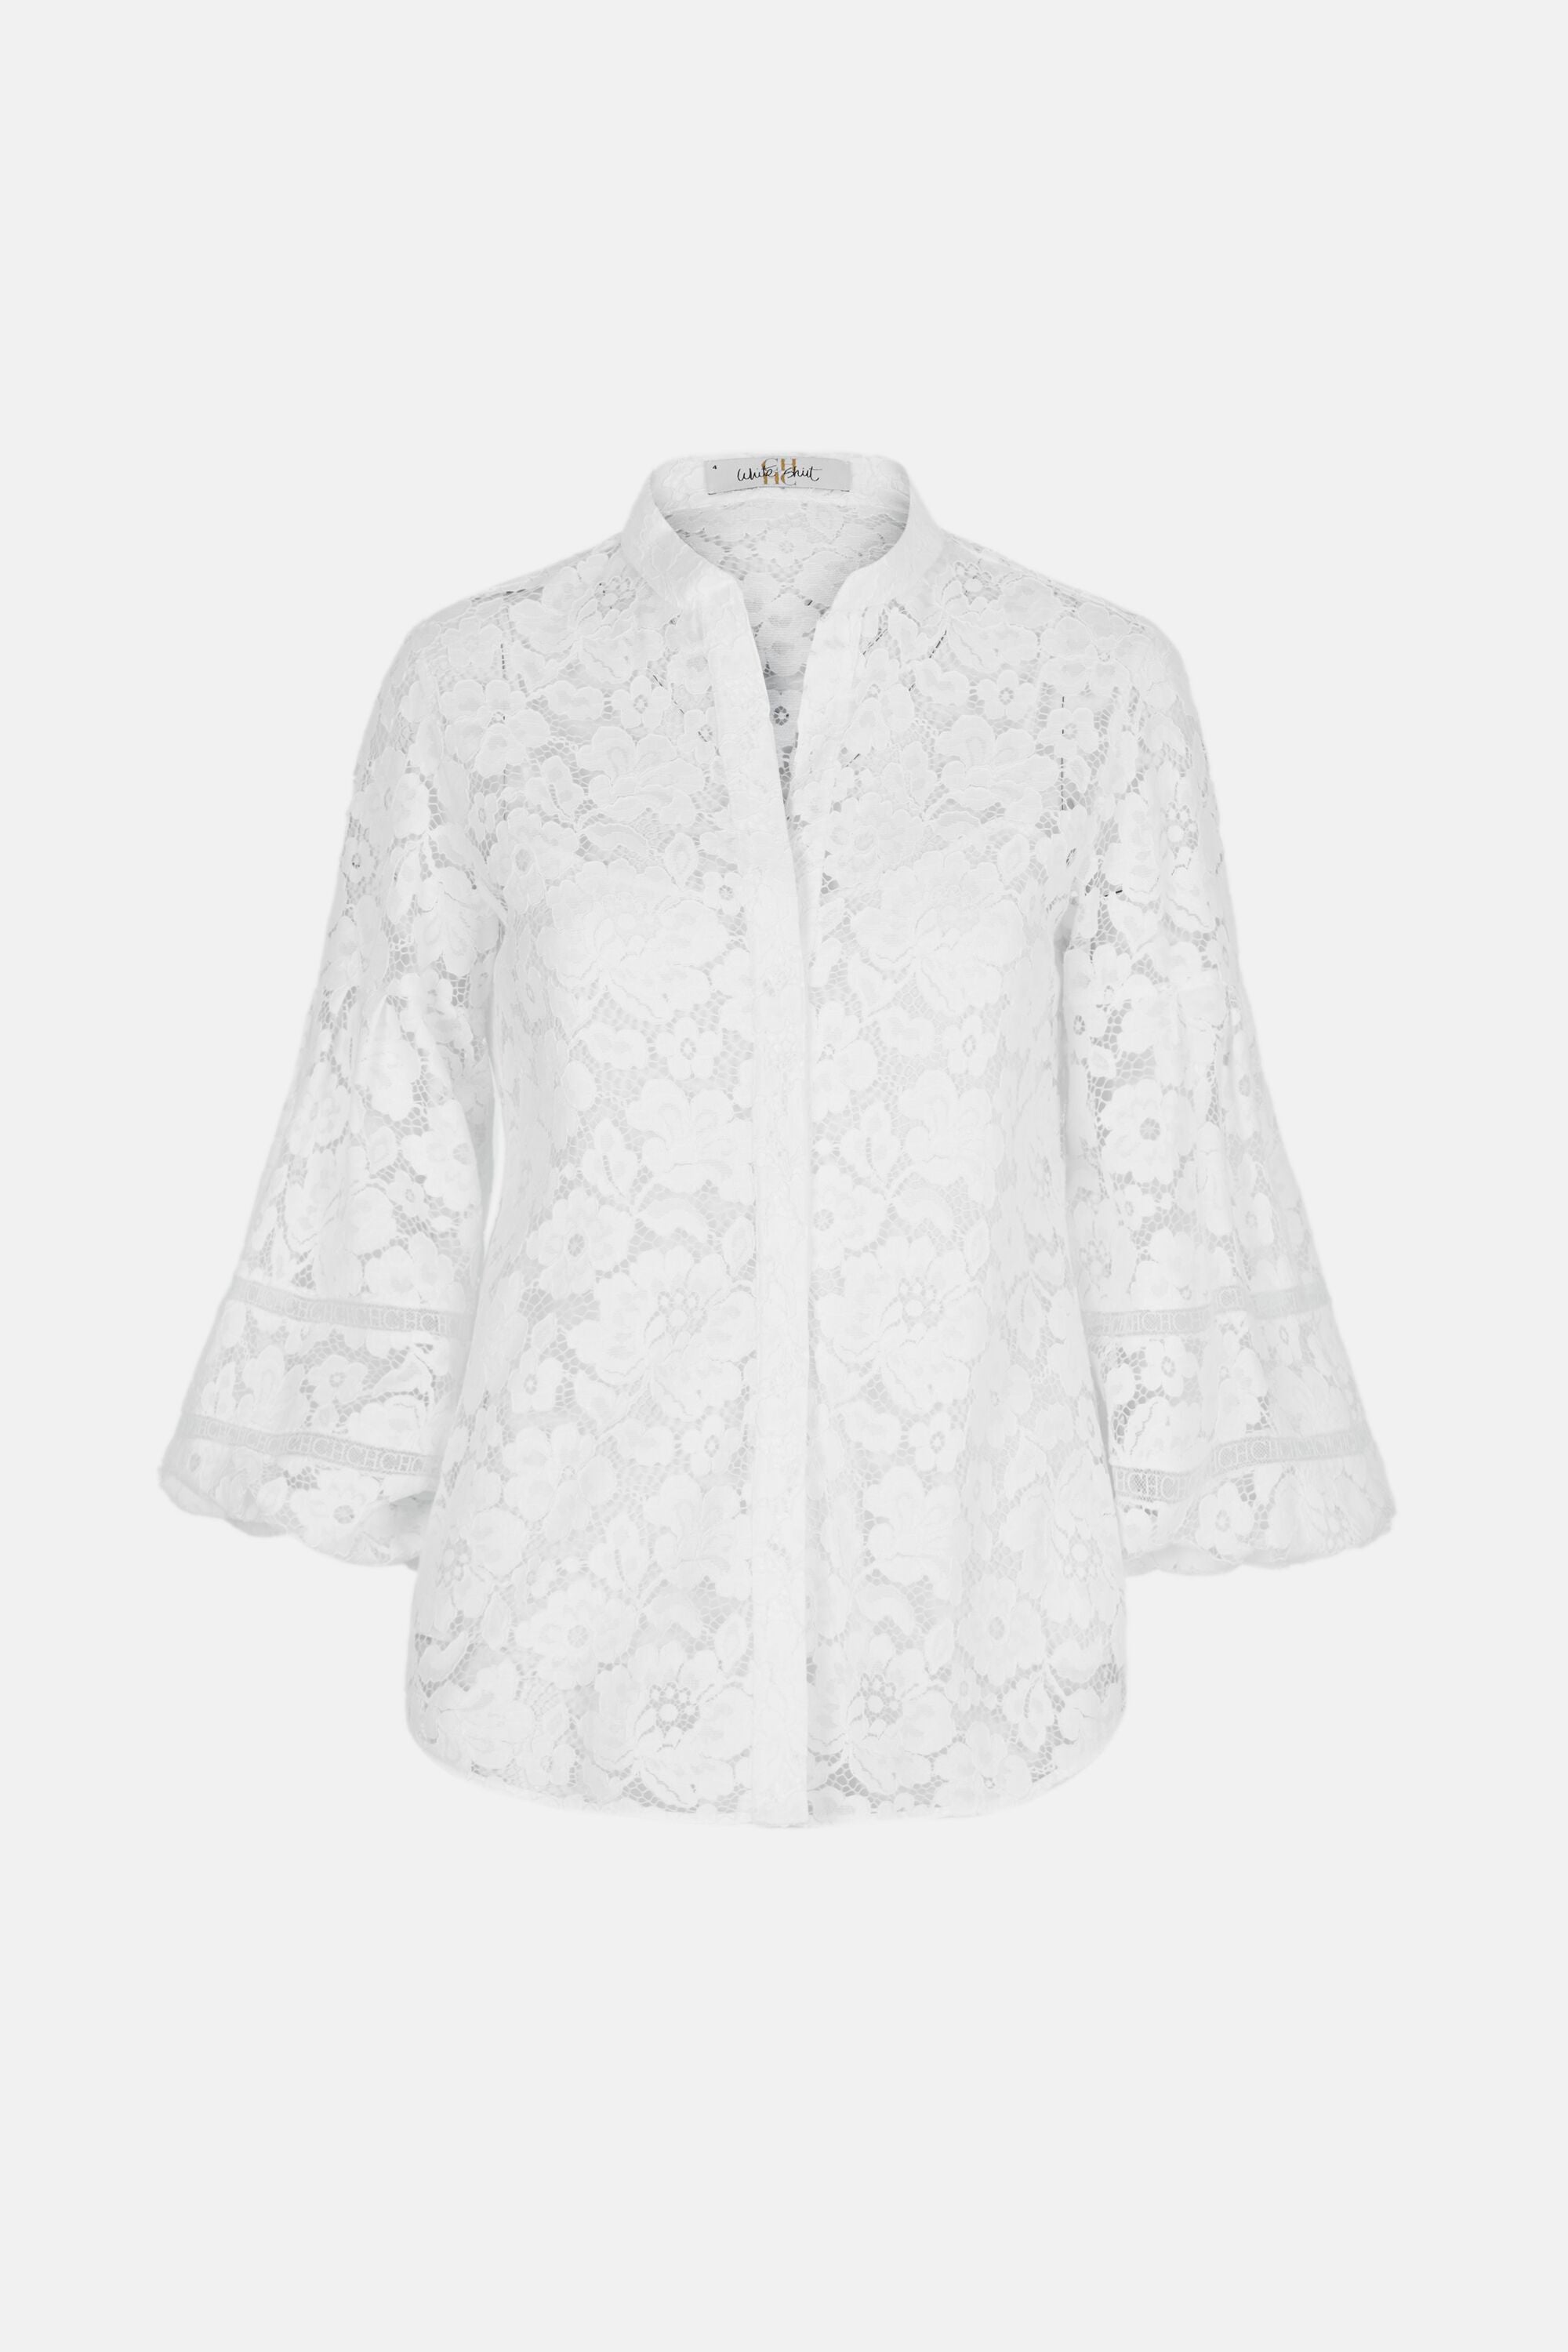 Puffed sleeve lace White Shirt